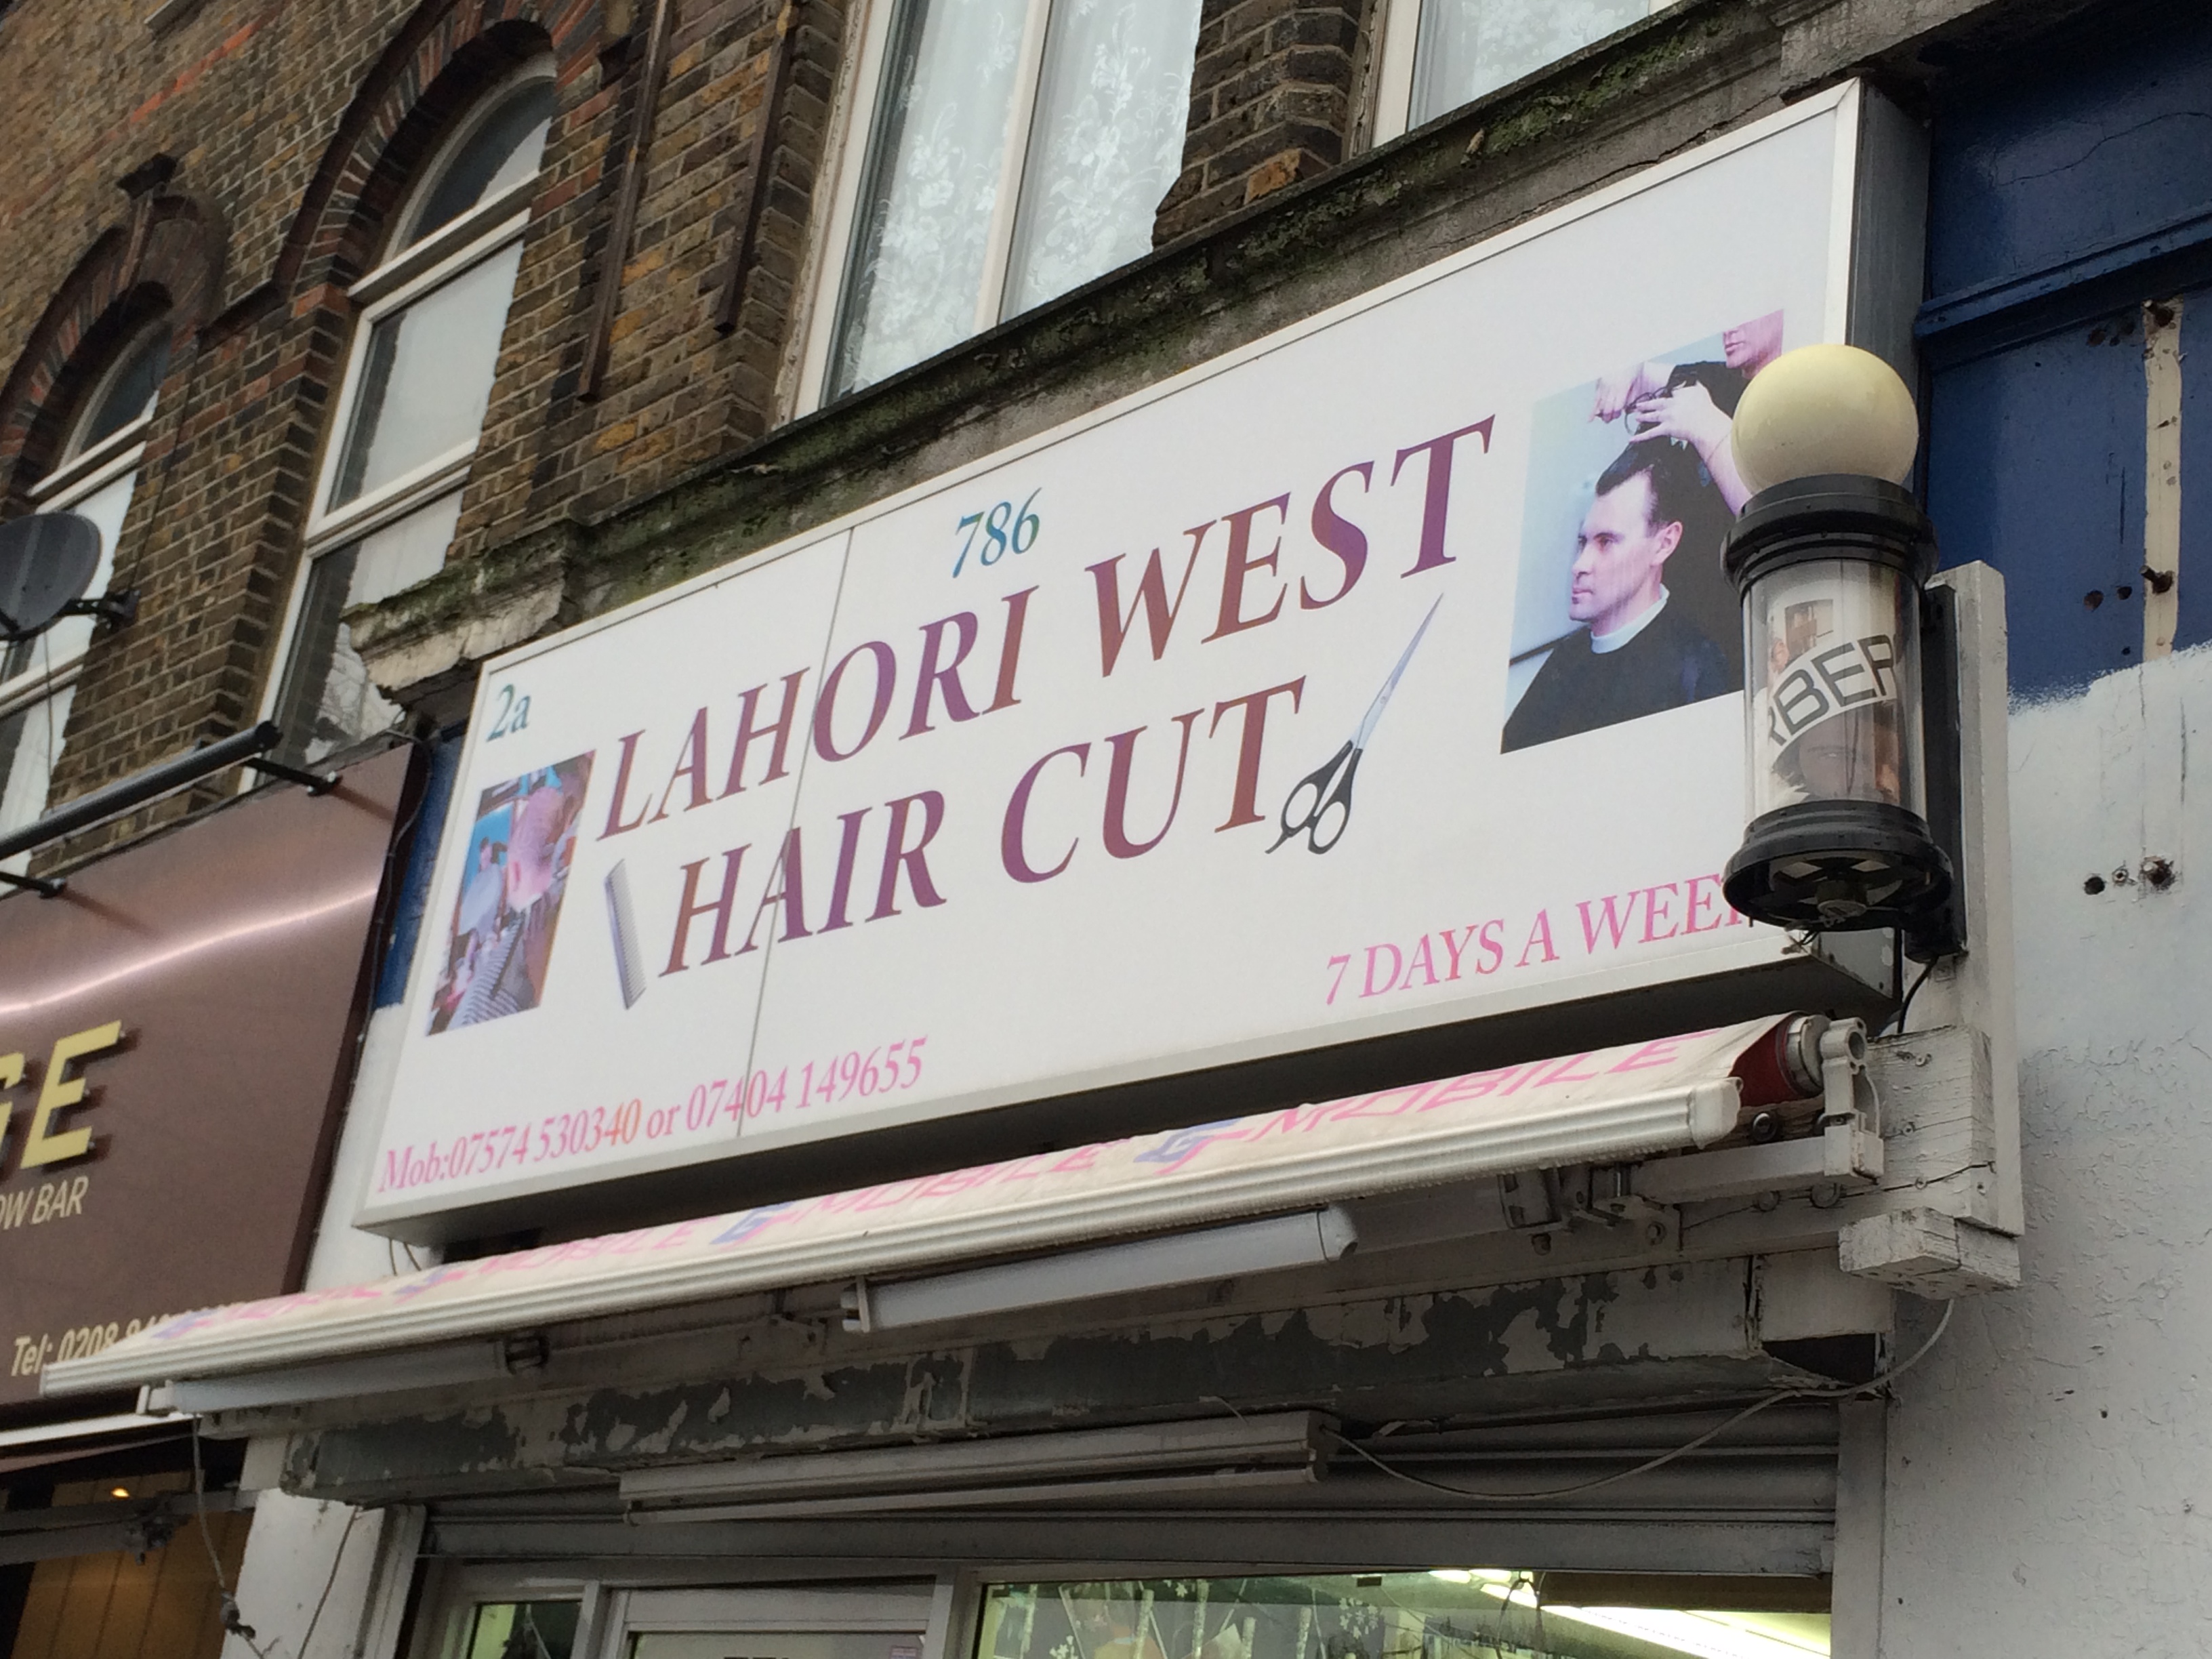 Lahore West Hair Cut